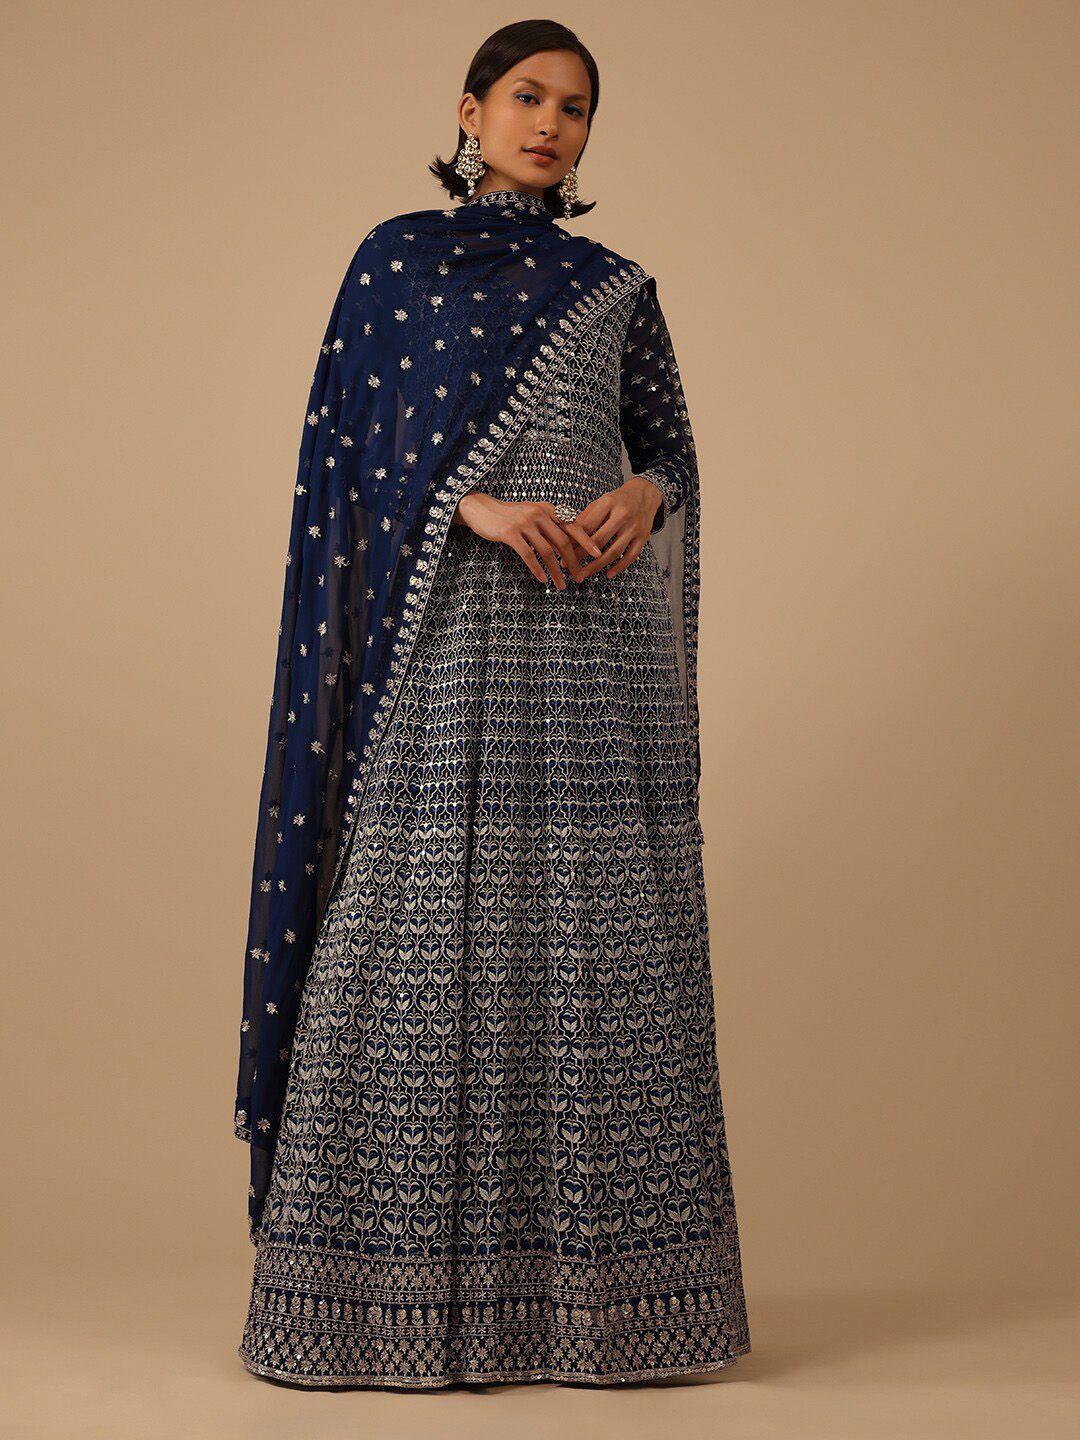 kalki fashion ethnic motifs embroidered ethnic dress with dupatta